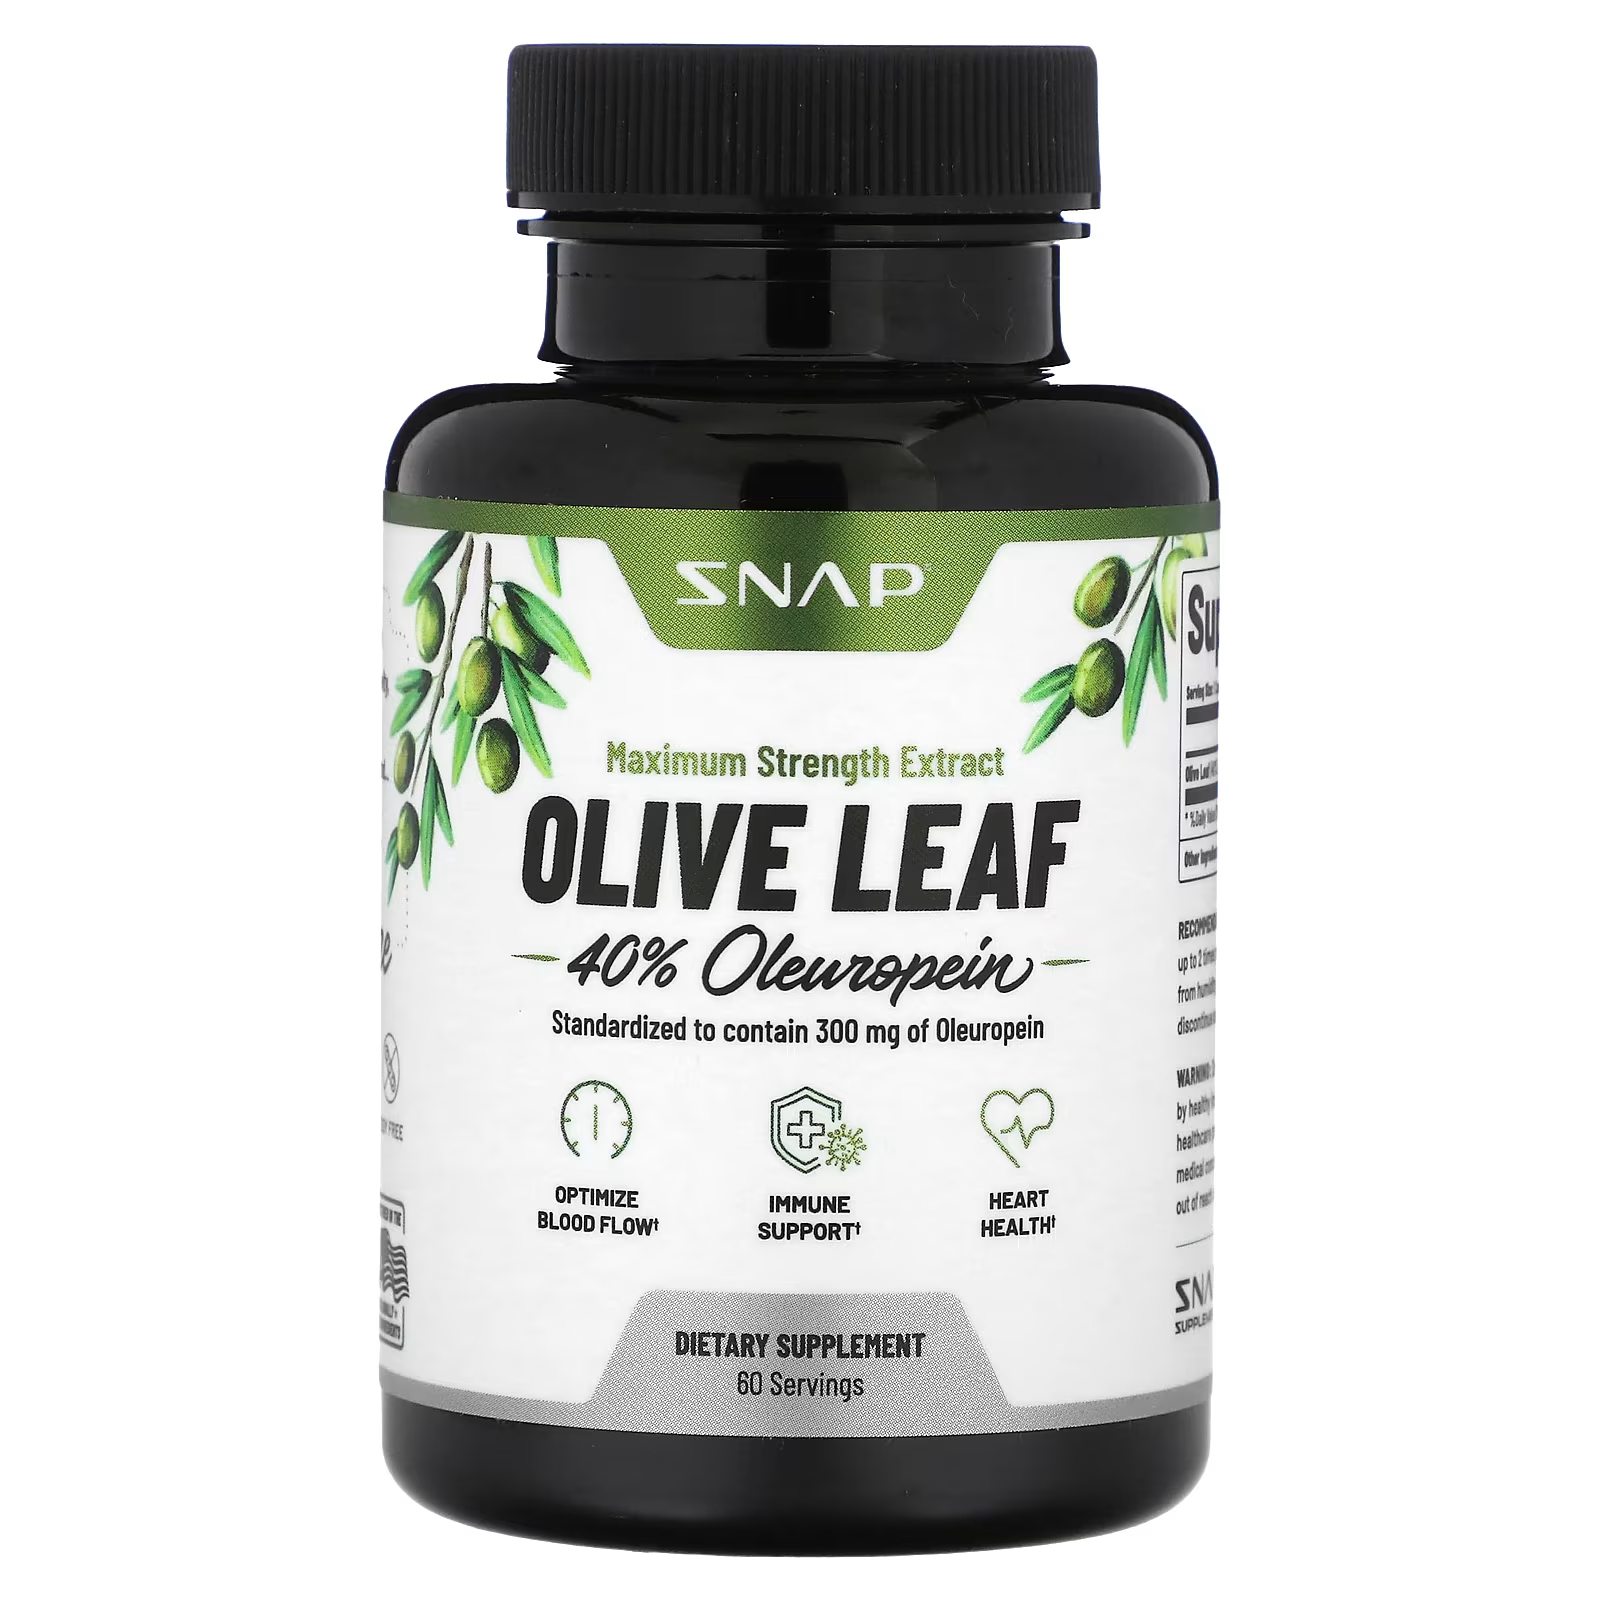 Пищевая добавка Snap Supplements Olive Leaf максимальная сила, 60 капсул пищевая добавка live conscious curcuwell максимальная сила 60 капсул